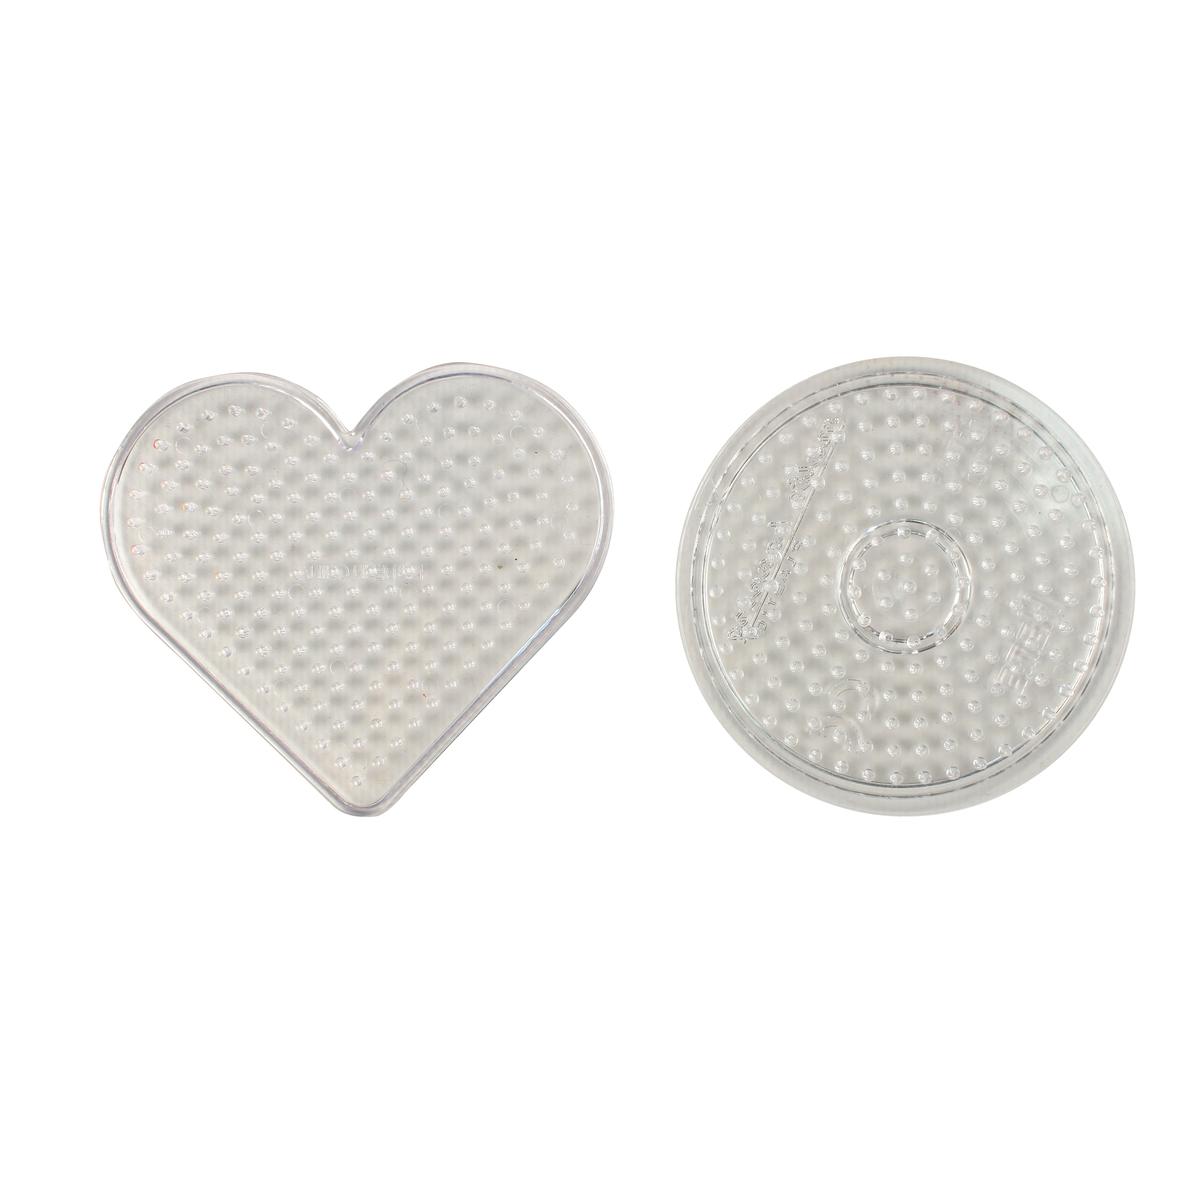 Plaques transparentes rondes et coeur perles à repasser 8 cm